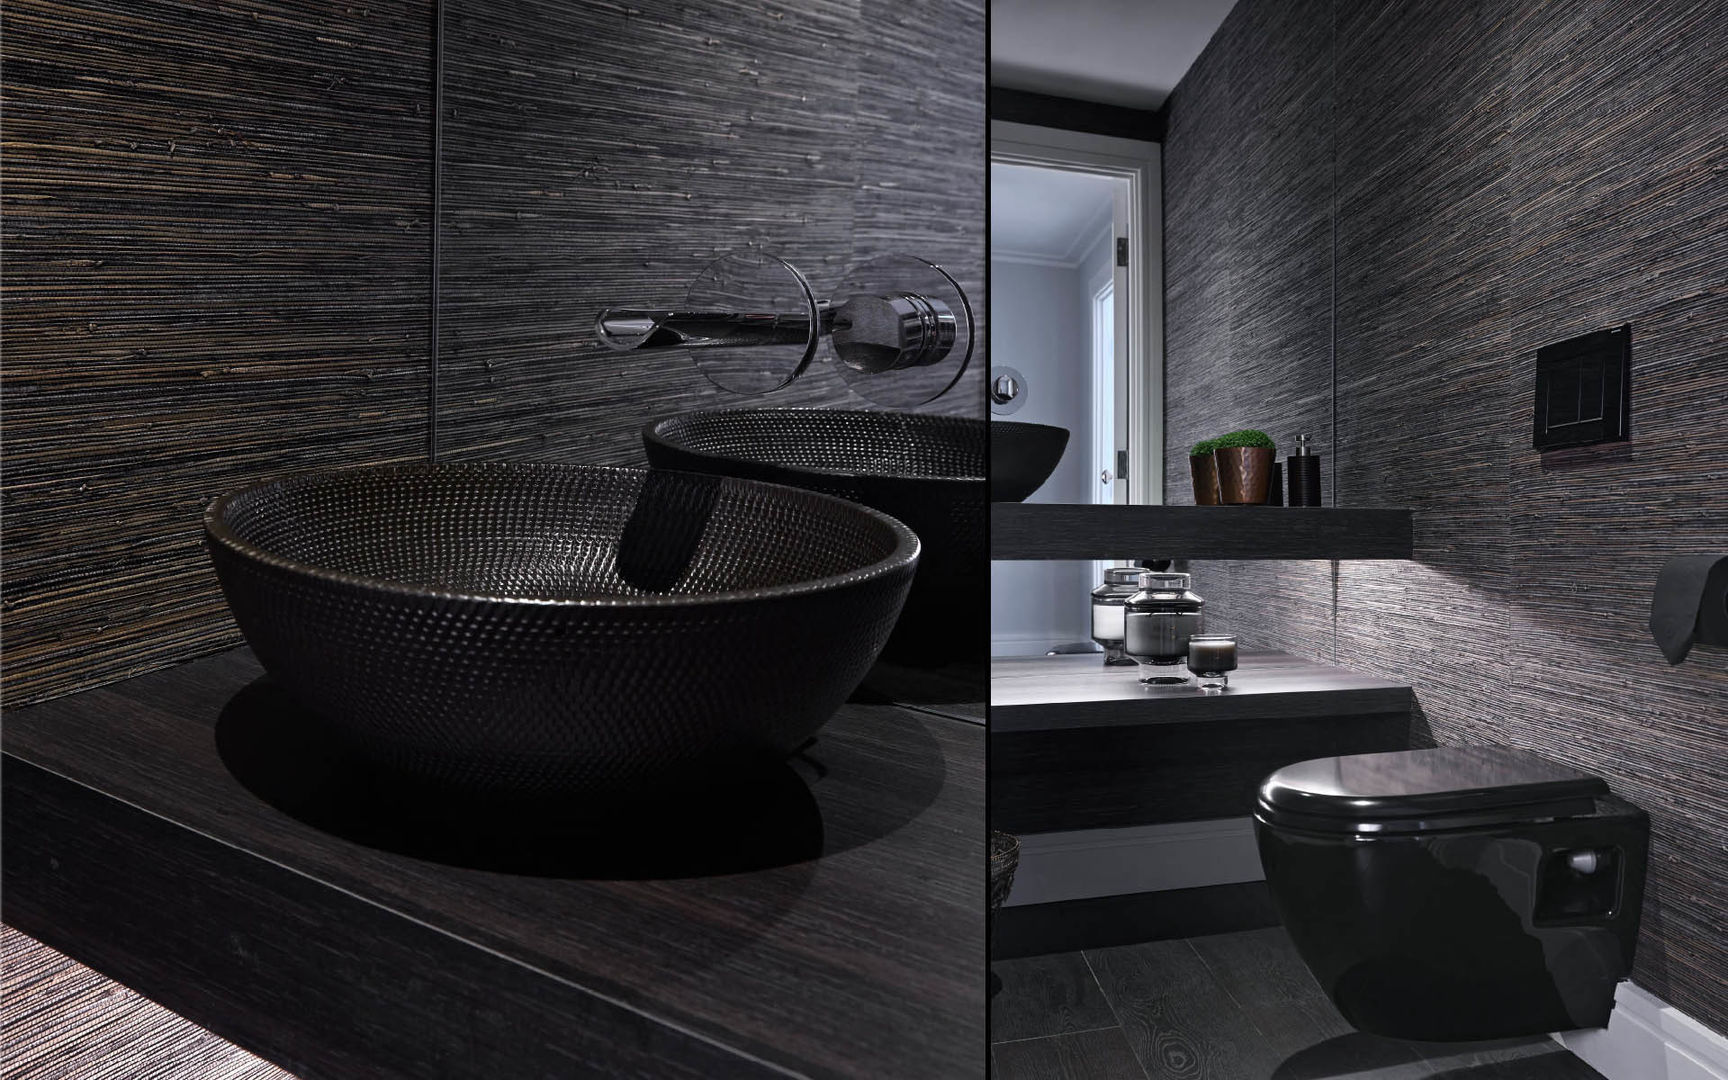 Luxury Penthouse Apartment: Discovery Dock, Boscolo Boscolo Modern bathroom Sinks